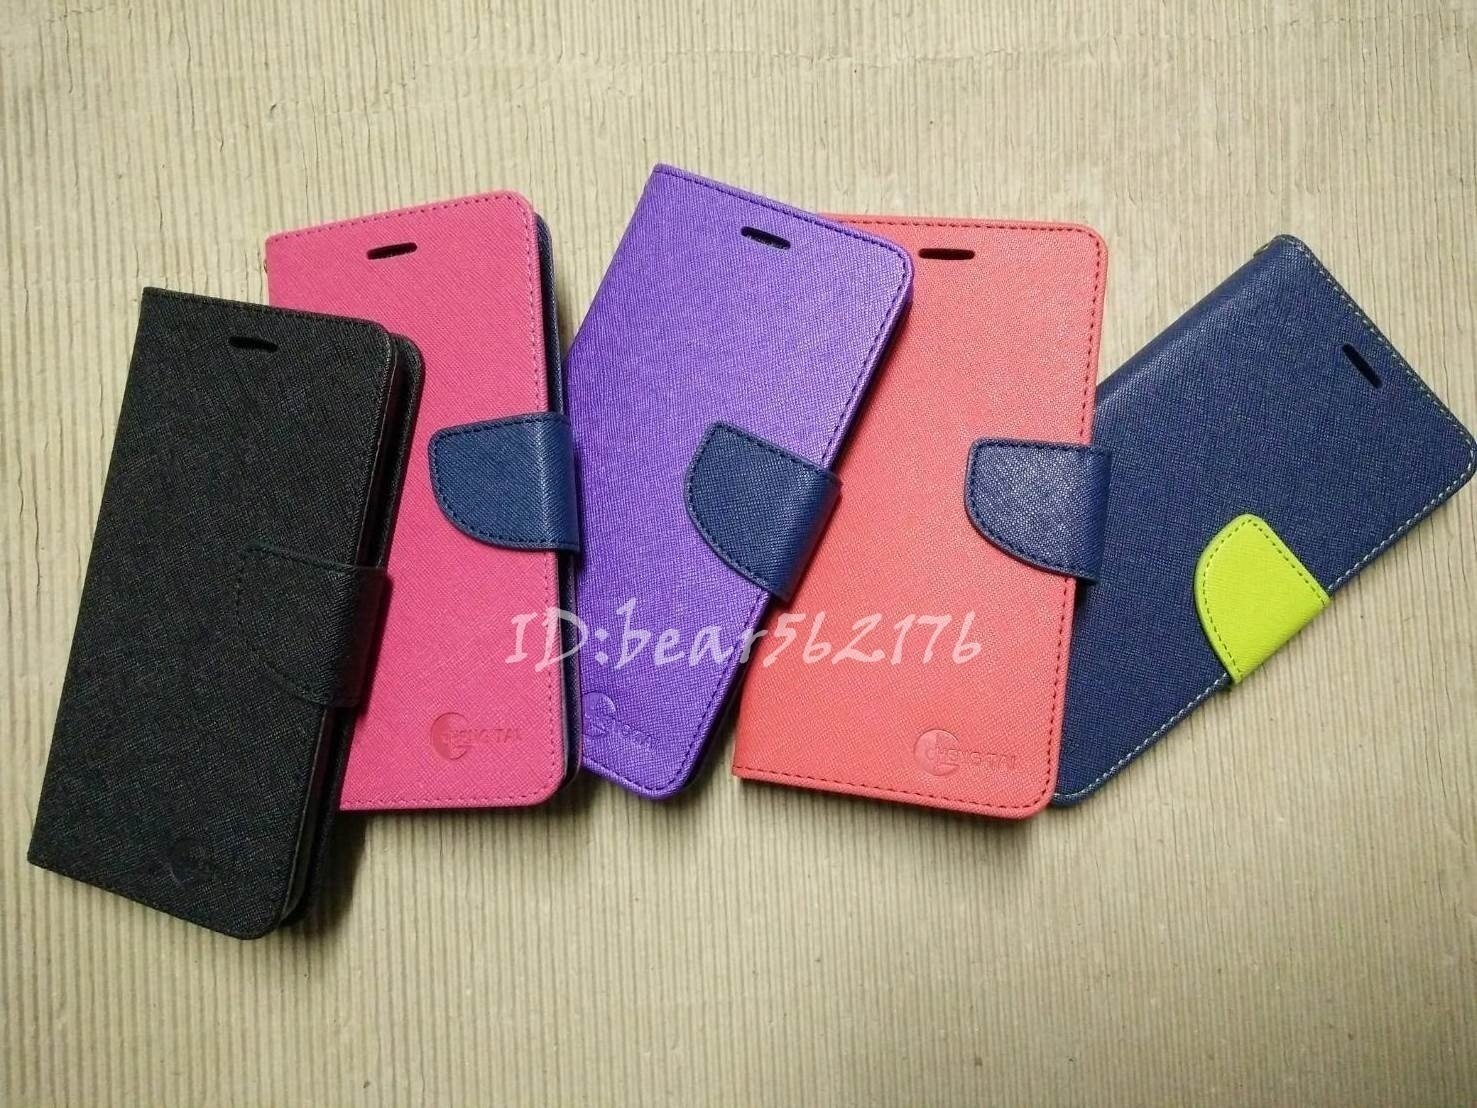 Xiaomi 紅米 NOTE 2 【經典款-雙色系】可立式側掀保護套/保護套/保護殼/側掀皮套